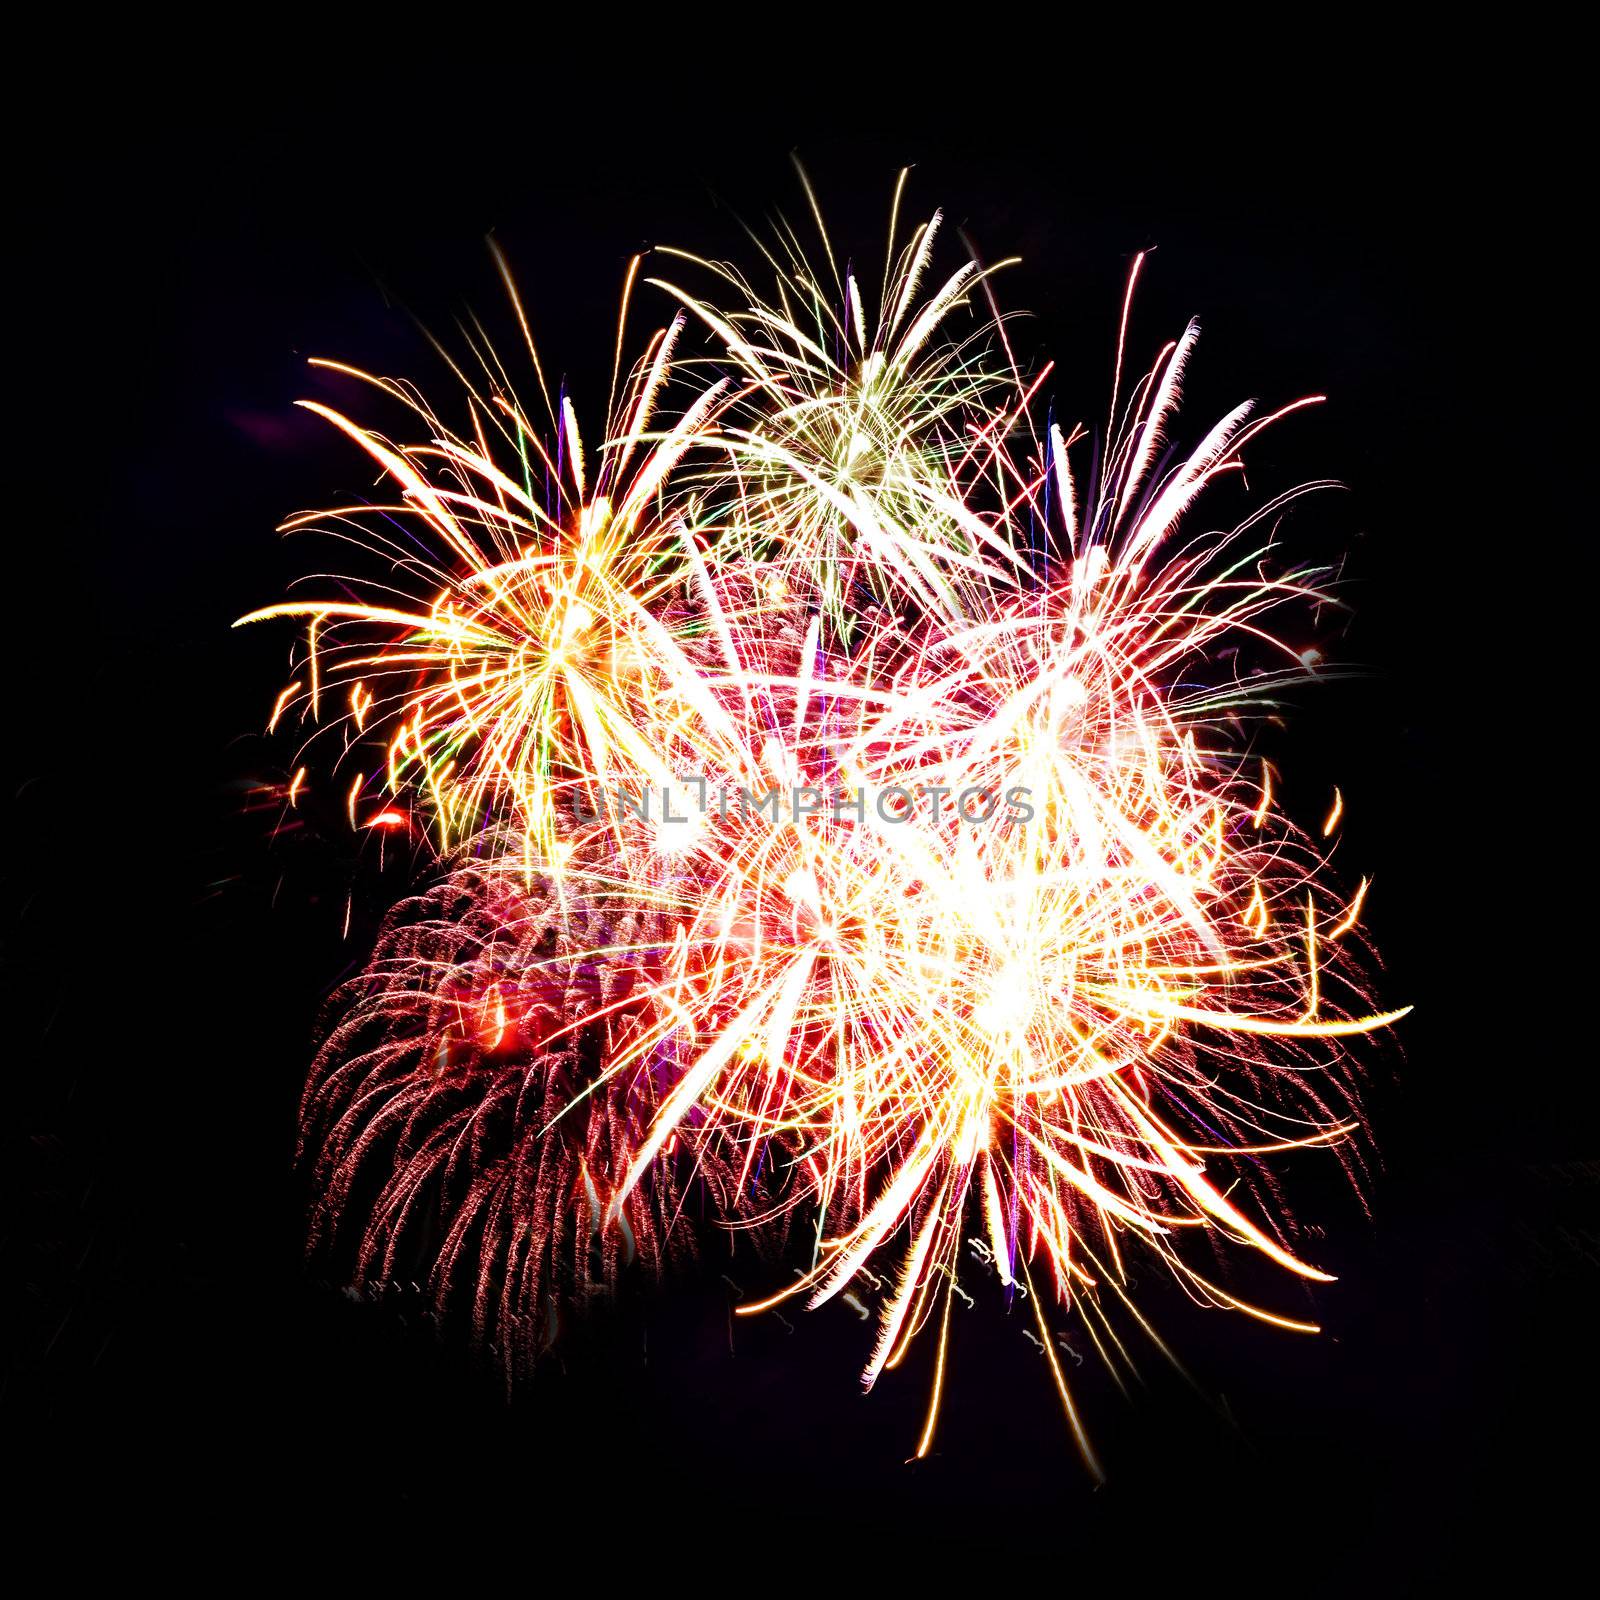 Firework streaks in night sky, celebration background by Kudryashka